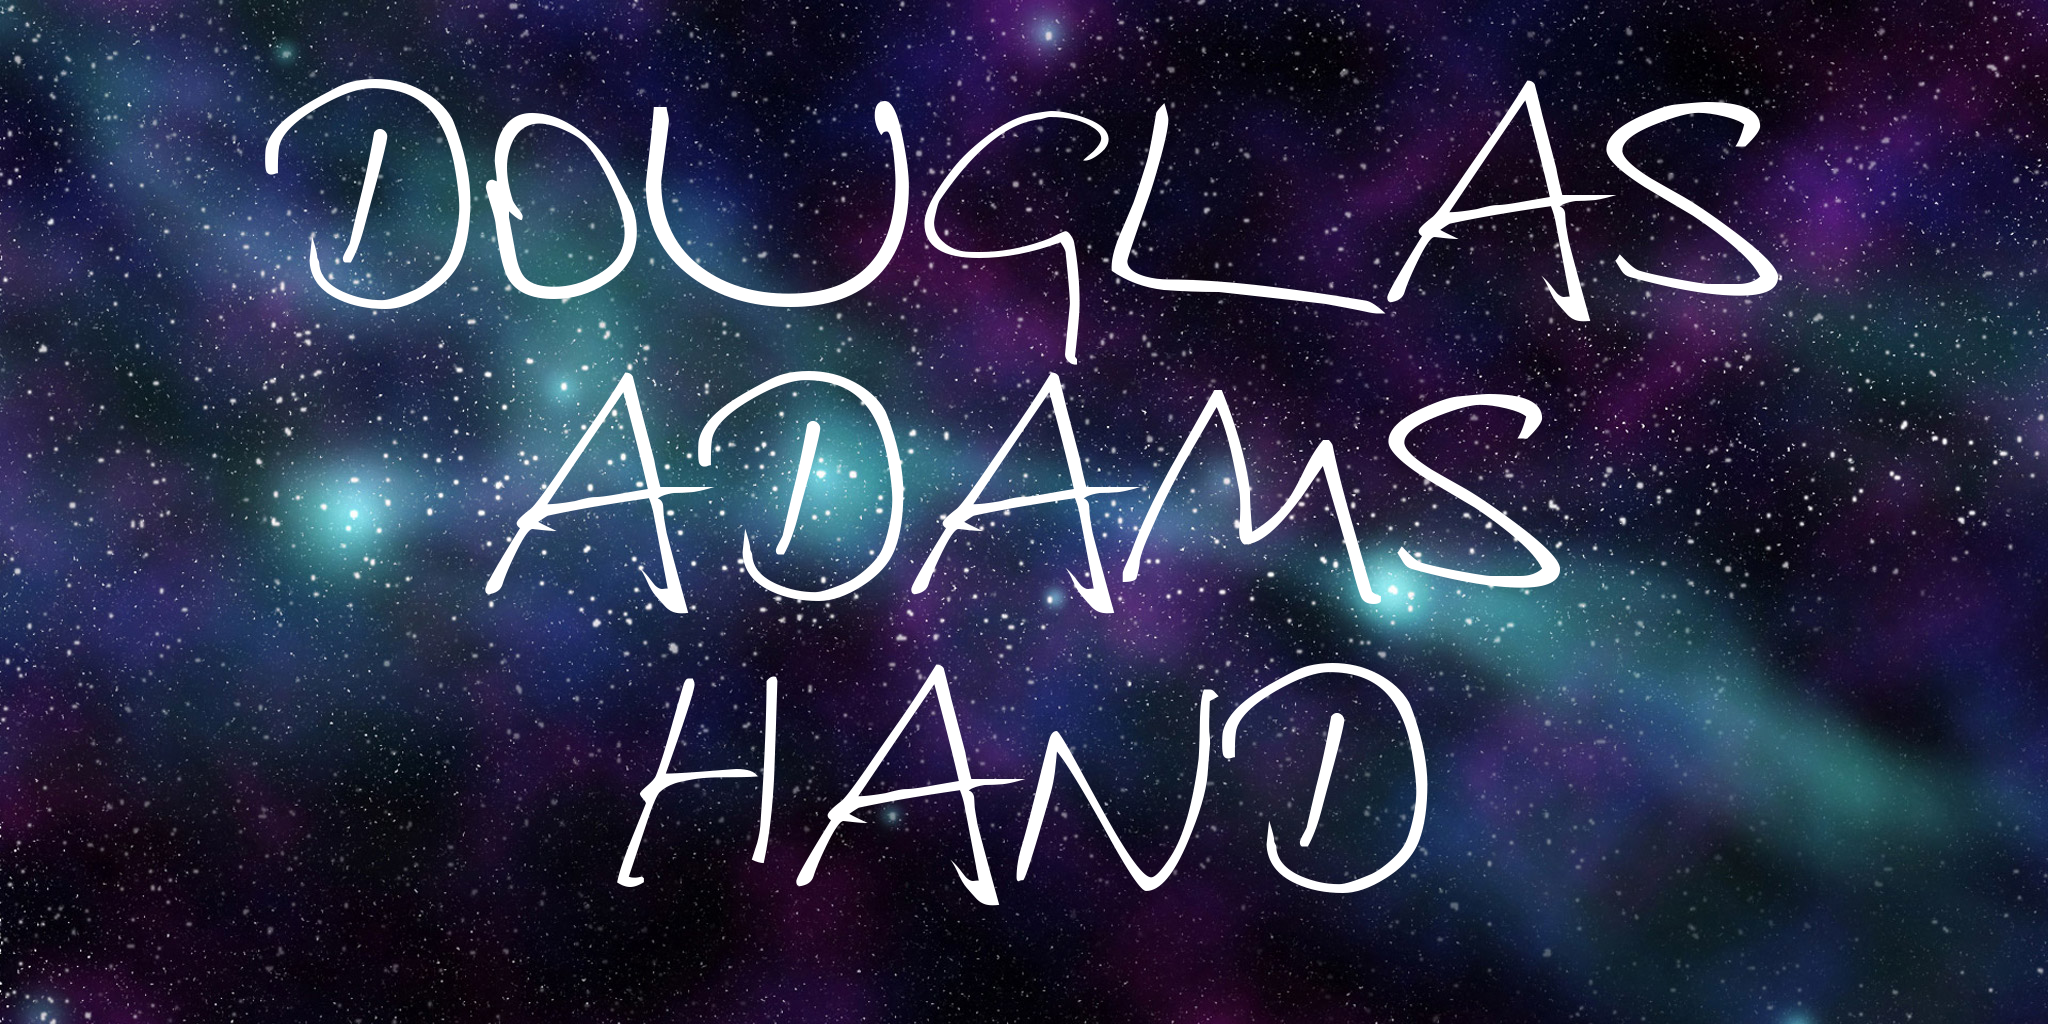 Douglas Adams Hand